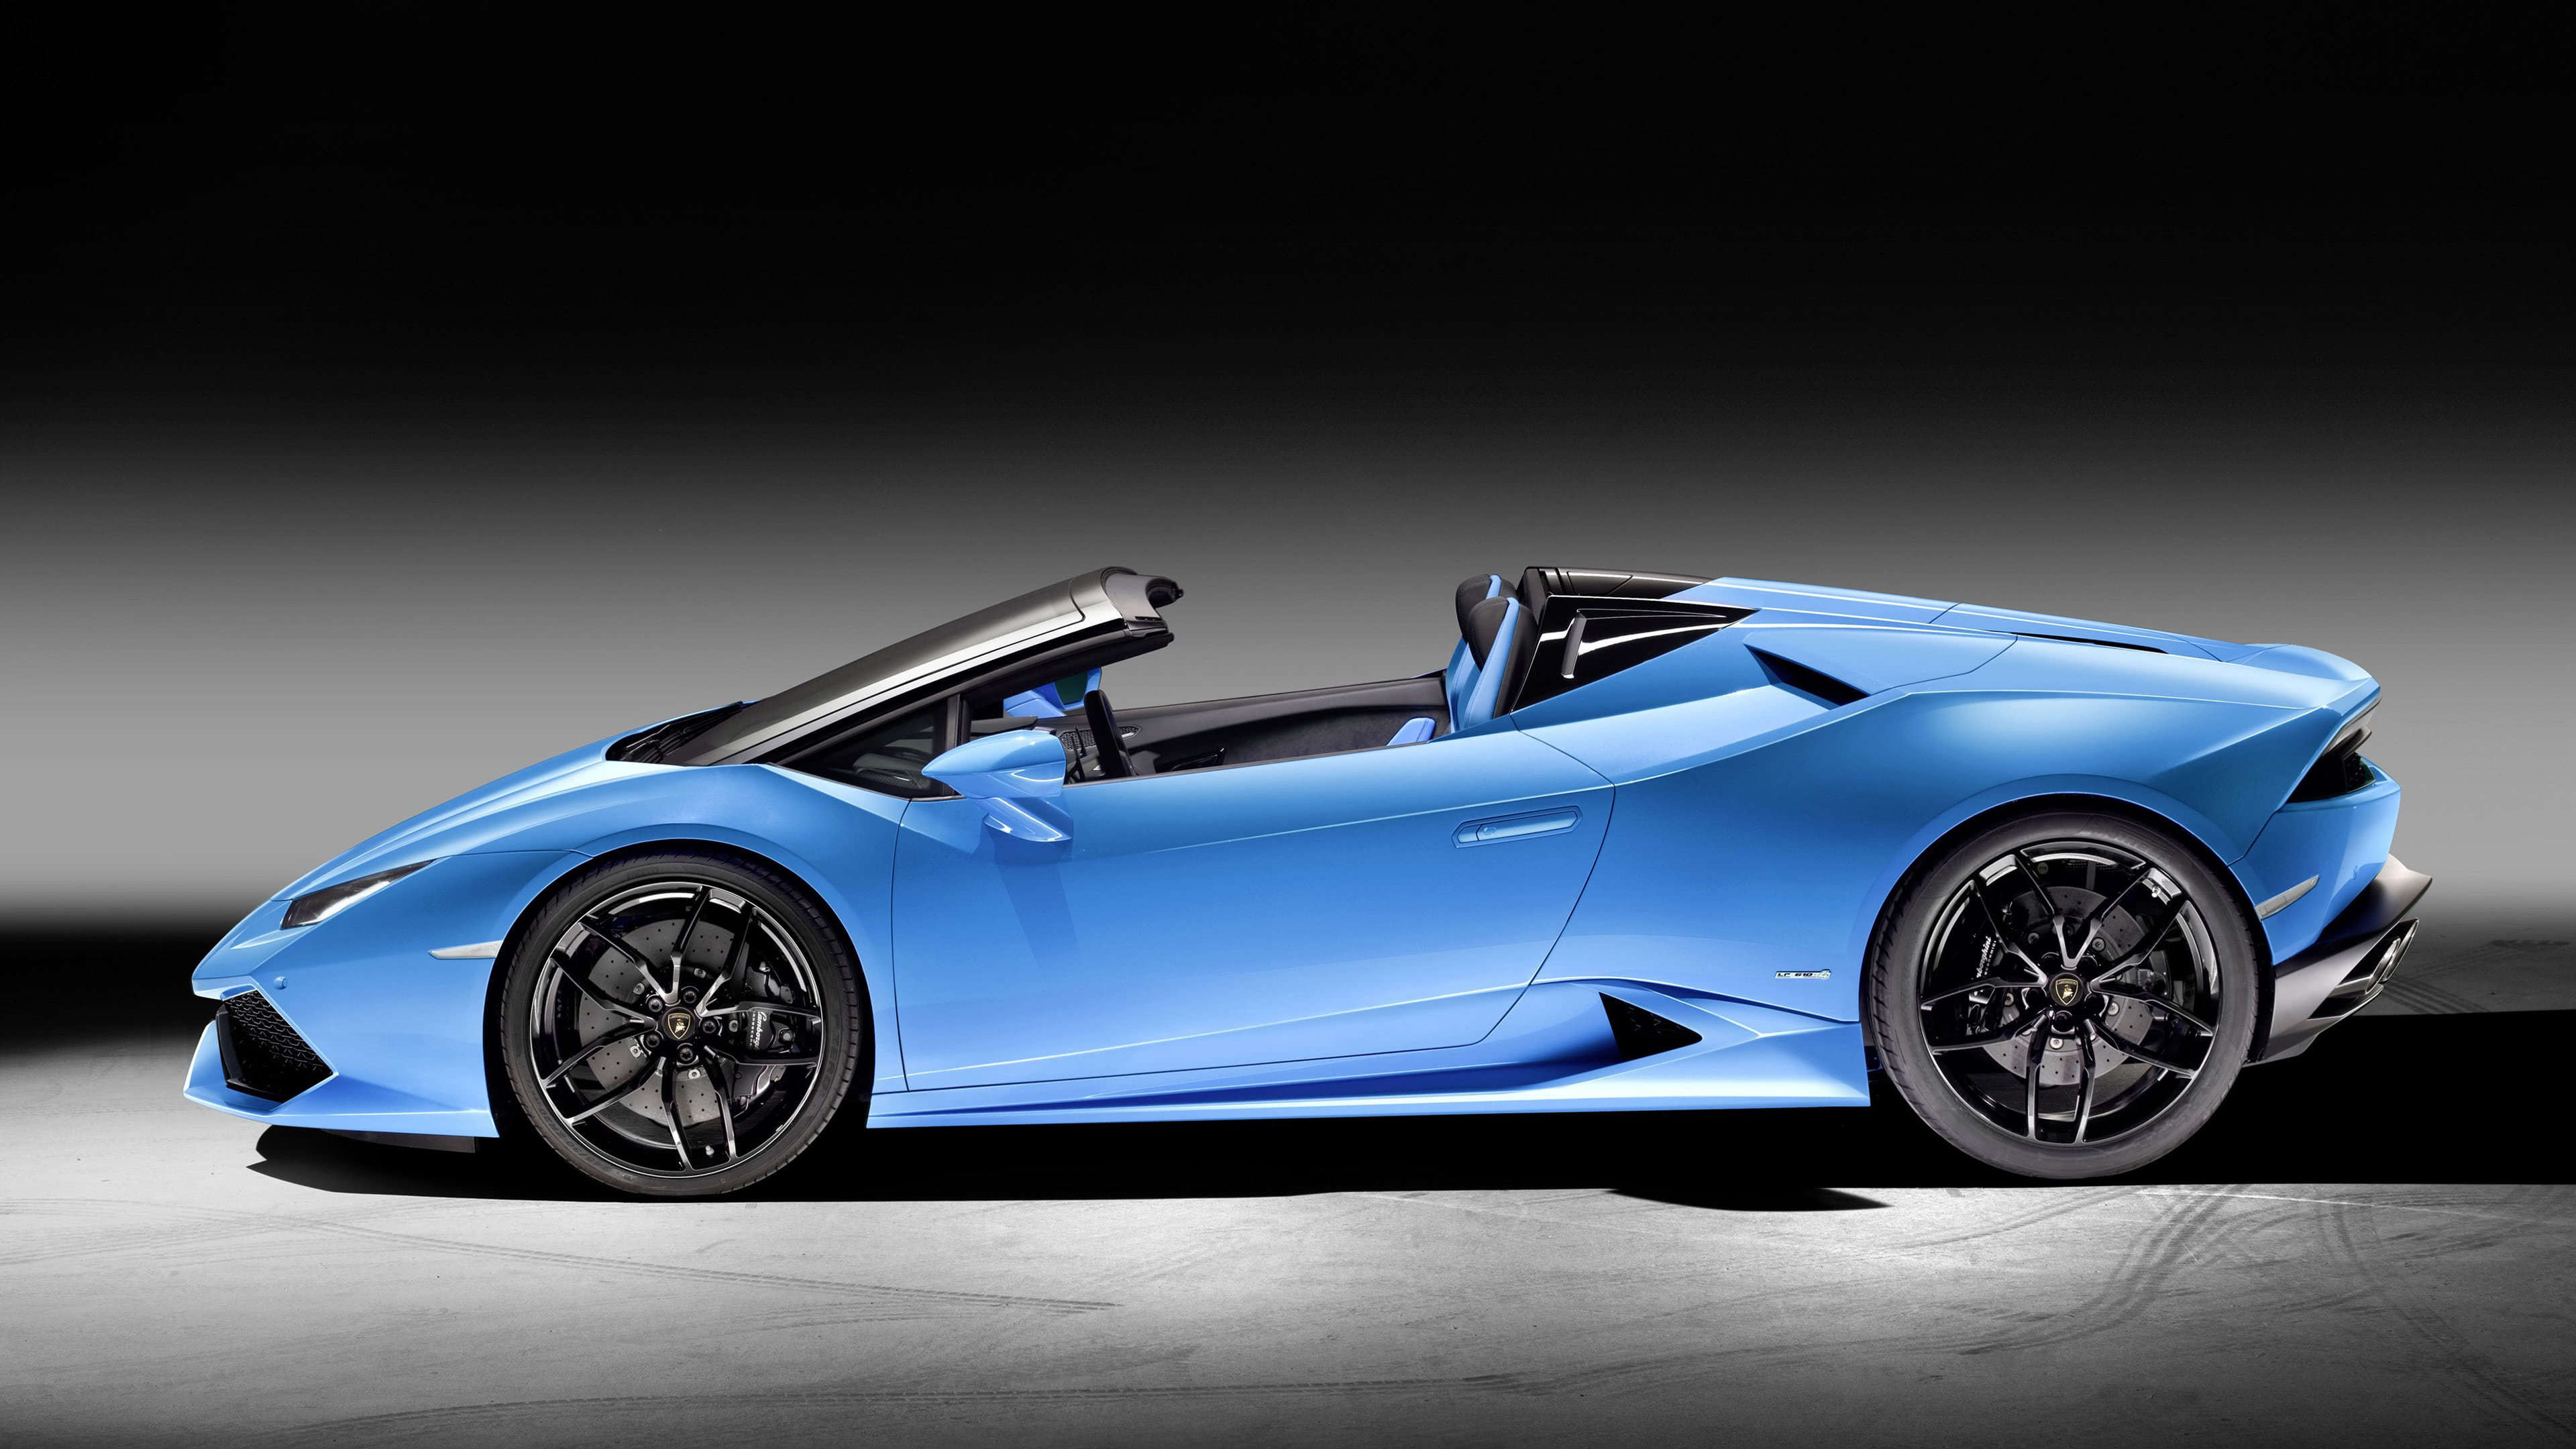 Lamborghini Huracan, 610-4 Spyder version, Blue side view, Ultra HD, 3840x2160 4K Desktop